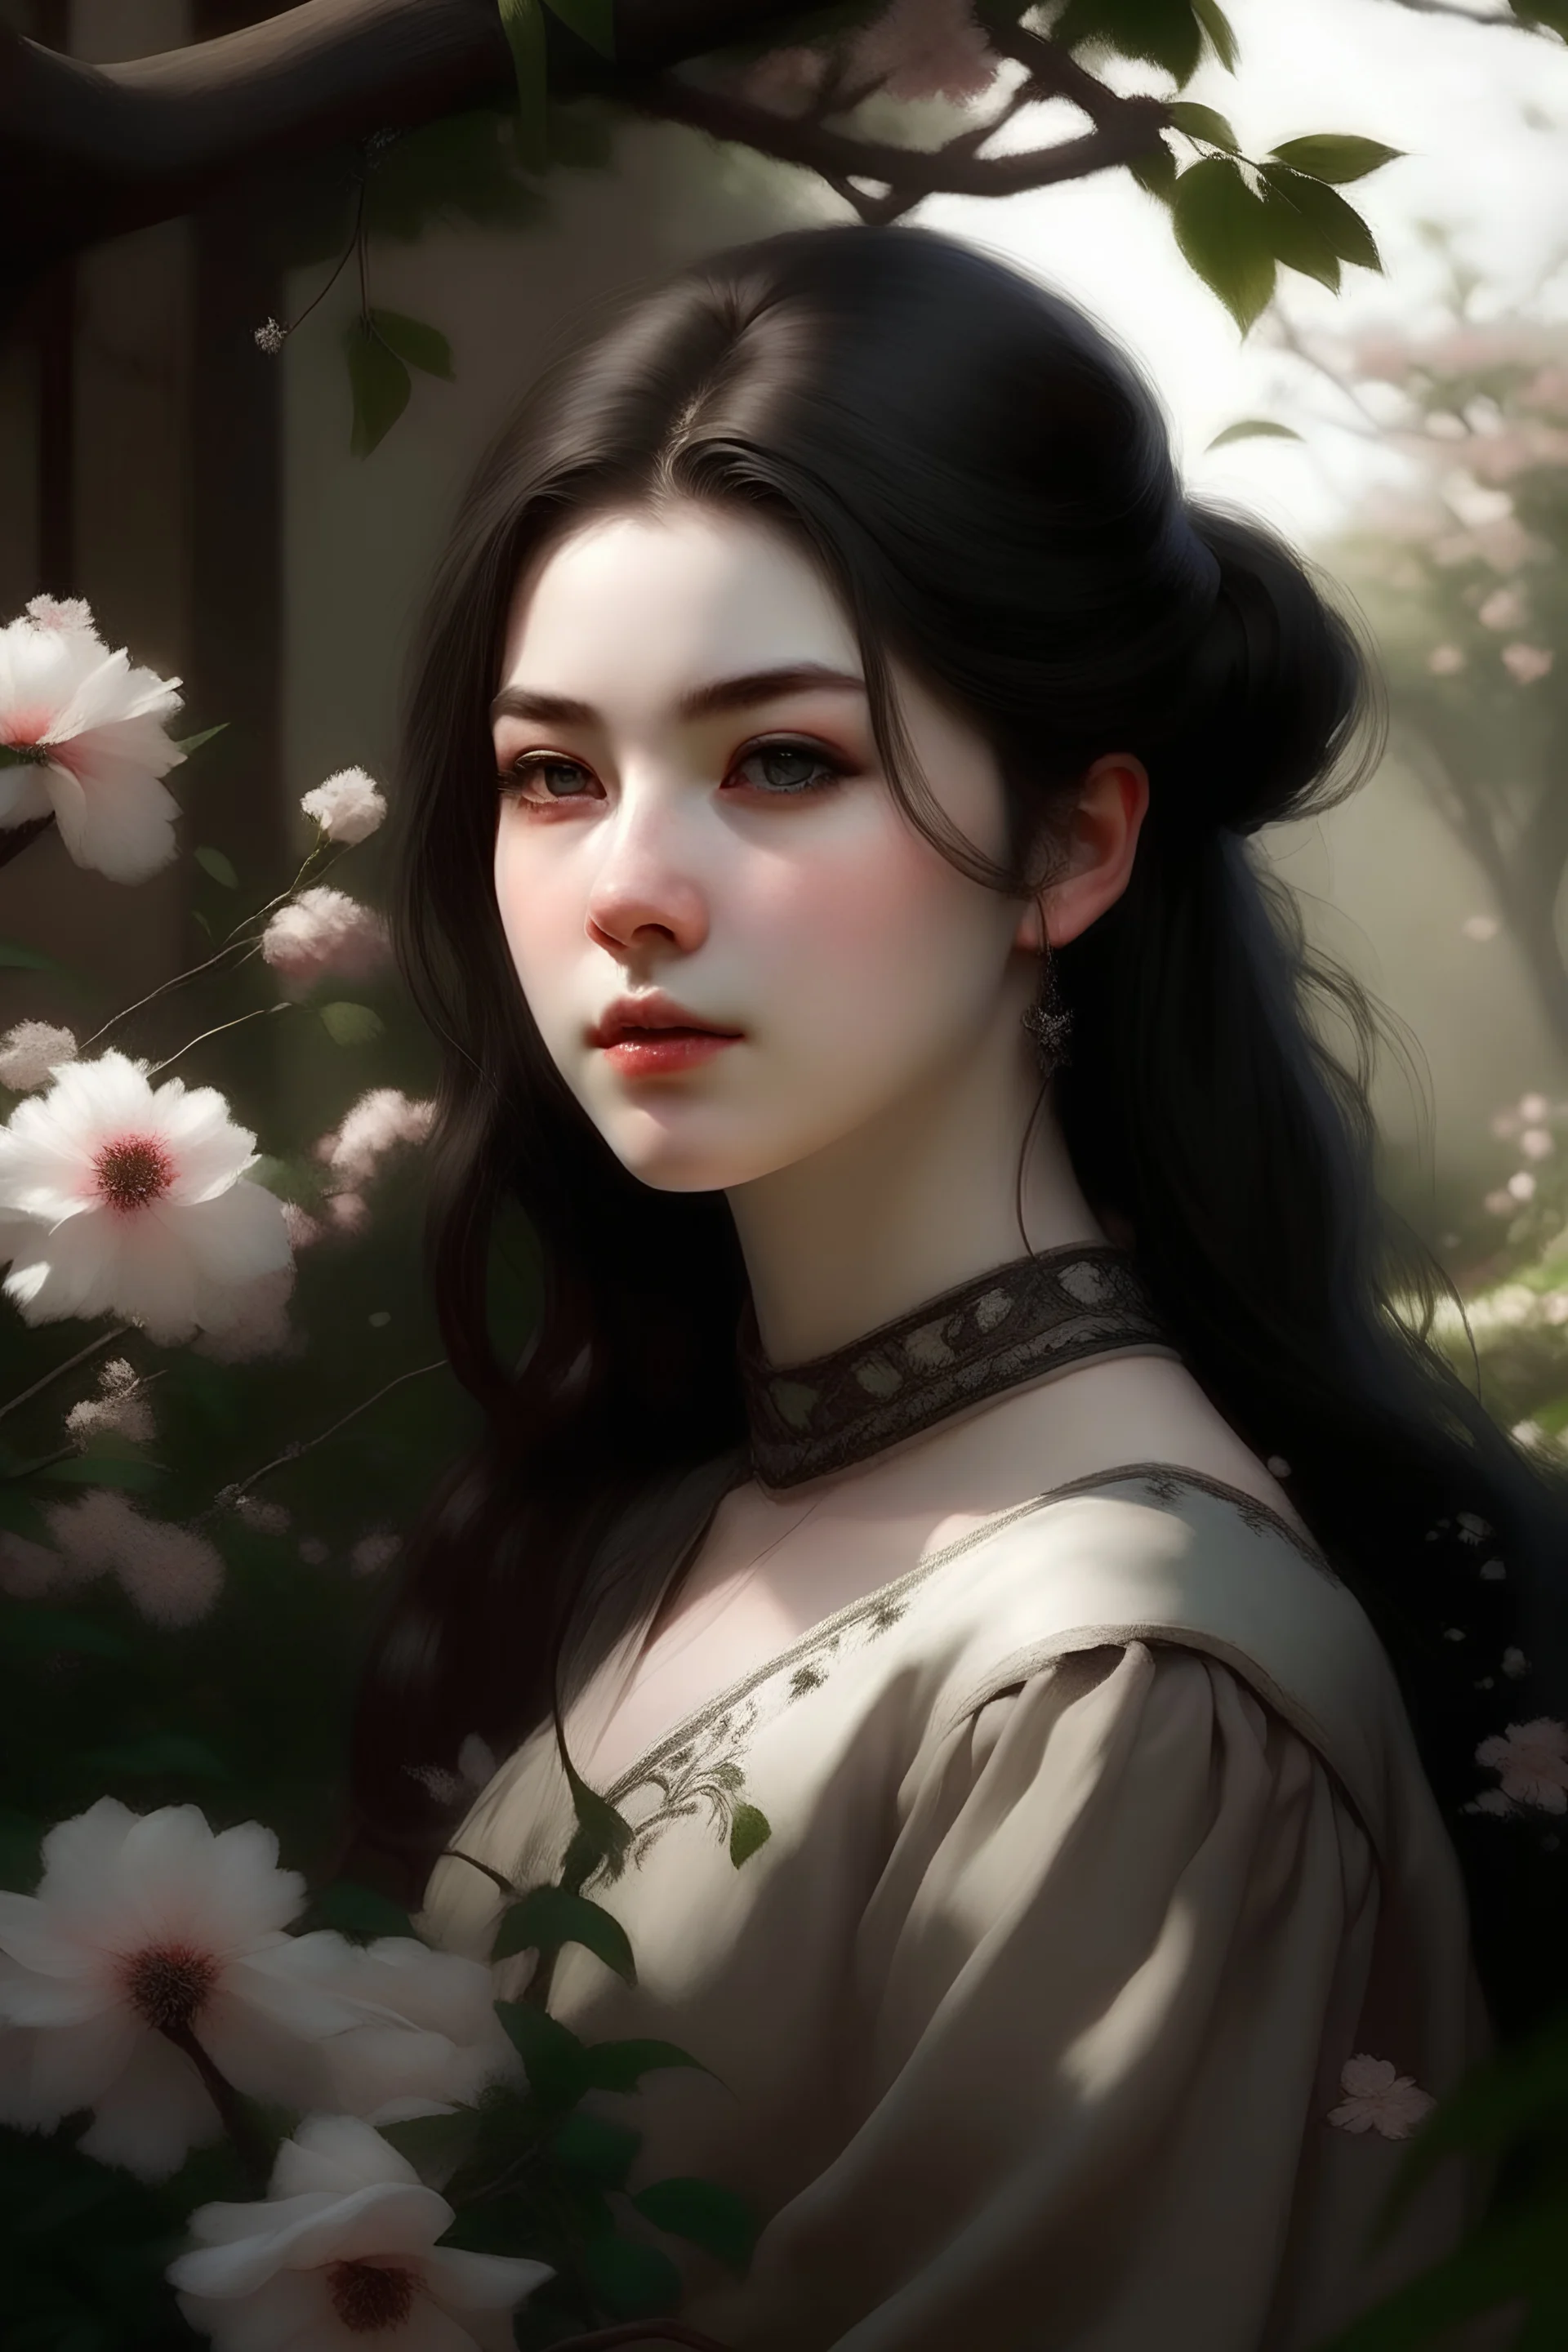 Beautiful Girl in the garden, 18 century, brunette, literally dark hair, dark eyes, fat, smell of sakura, rest, detailed face, england